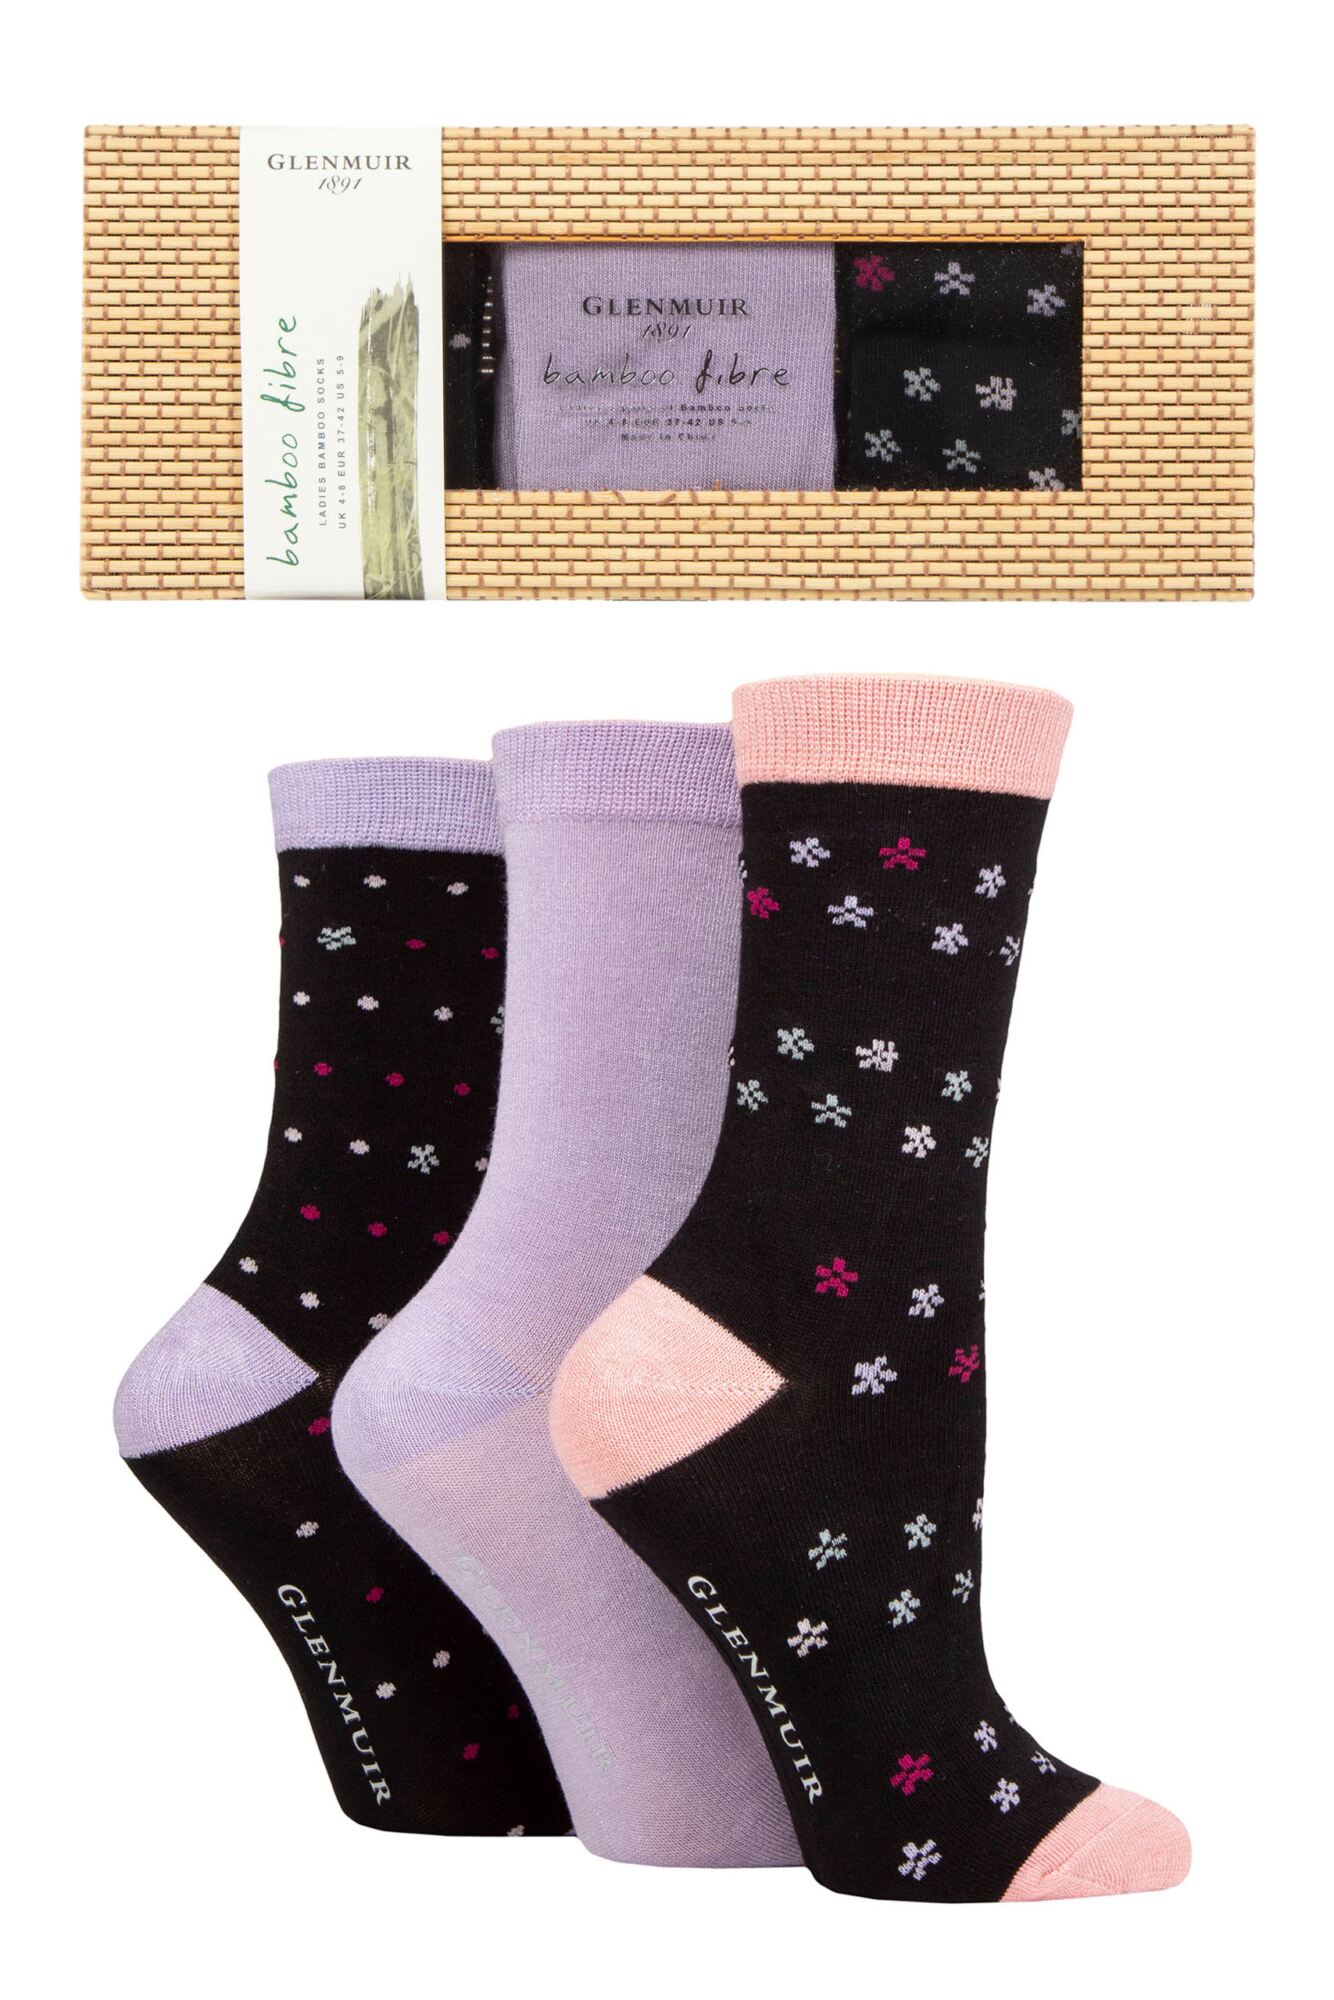 GLENMUIR 3PK Gift Boxed Bamboo Socks -Womens 4-8